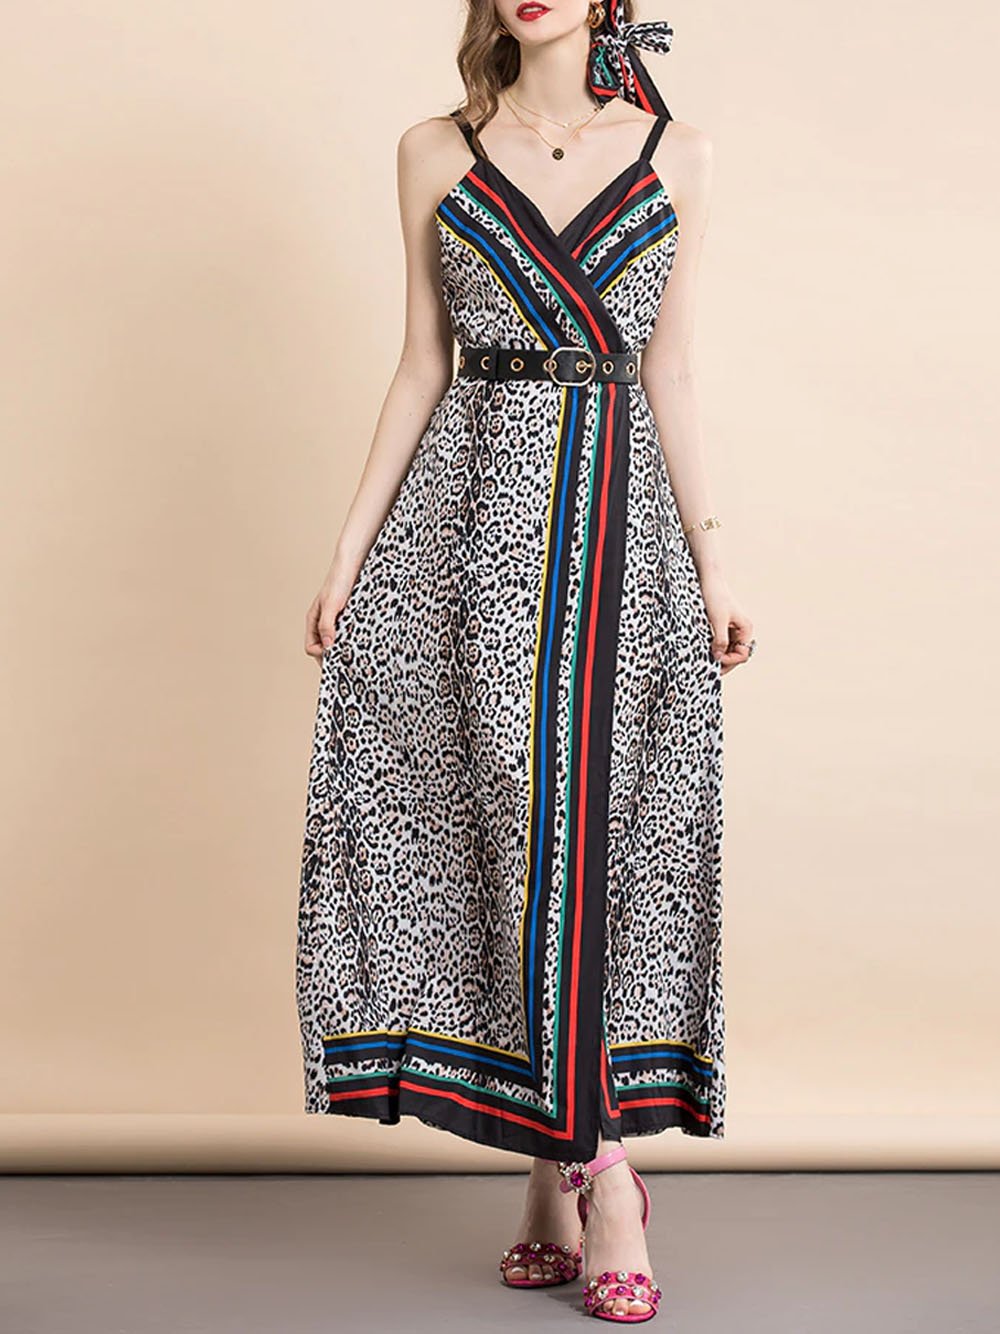 KELLE Leopard Maxi Dress